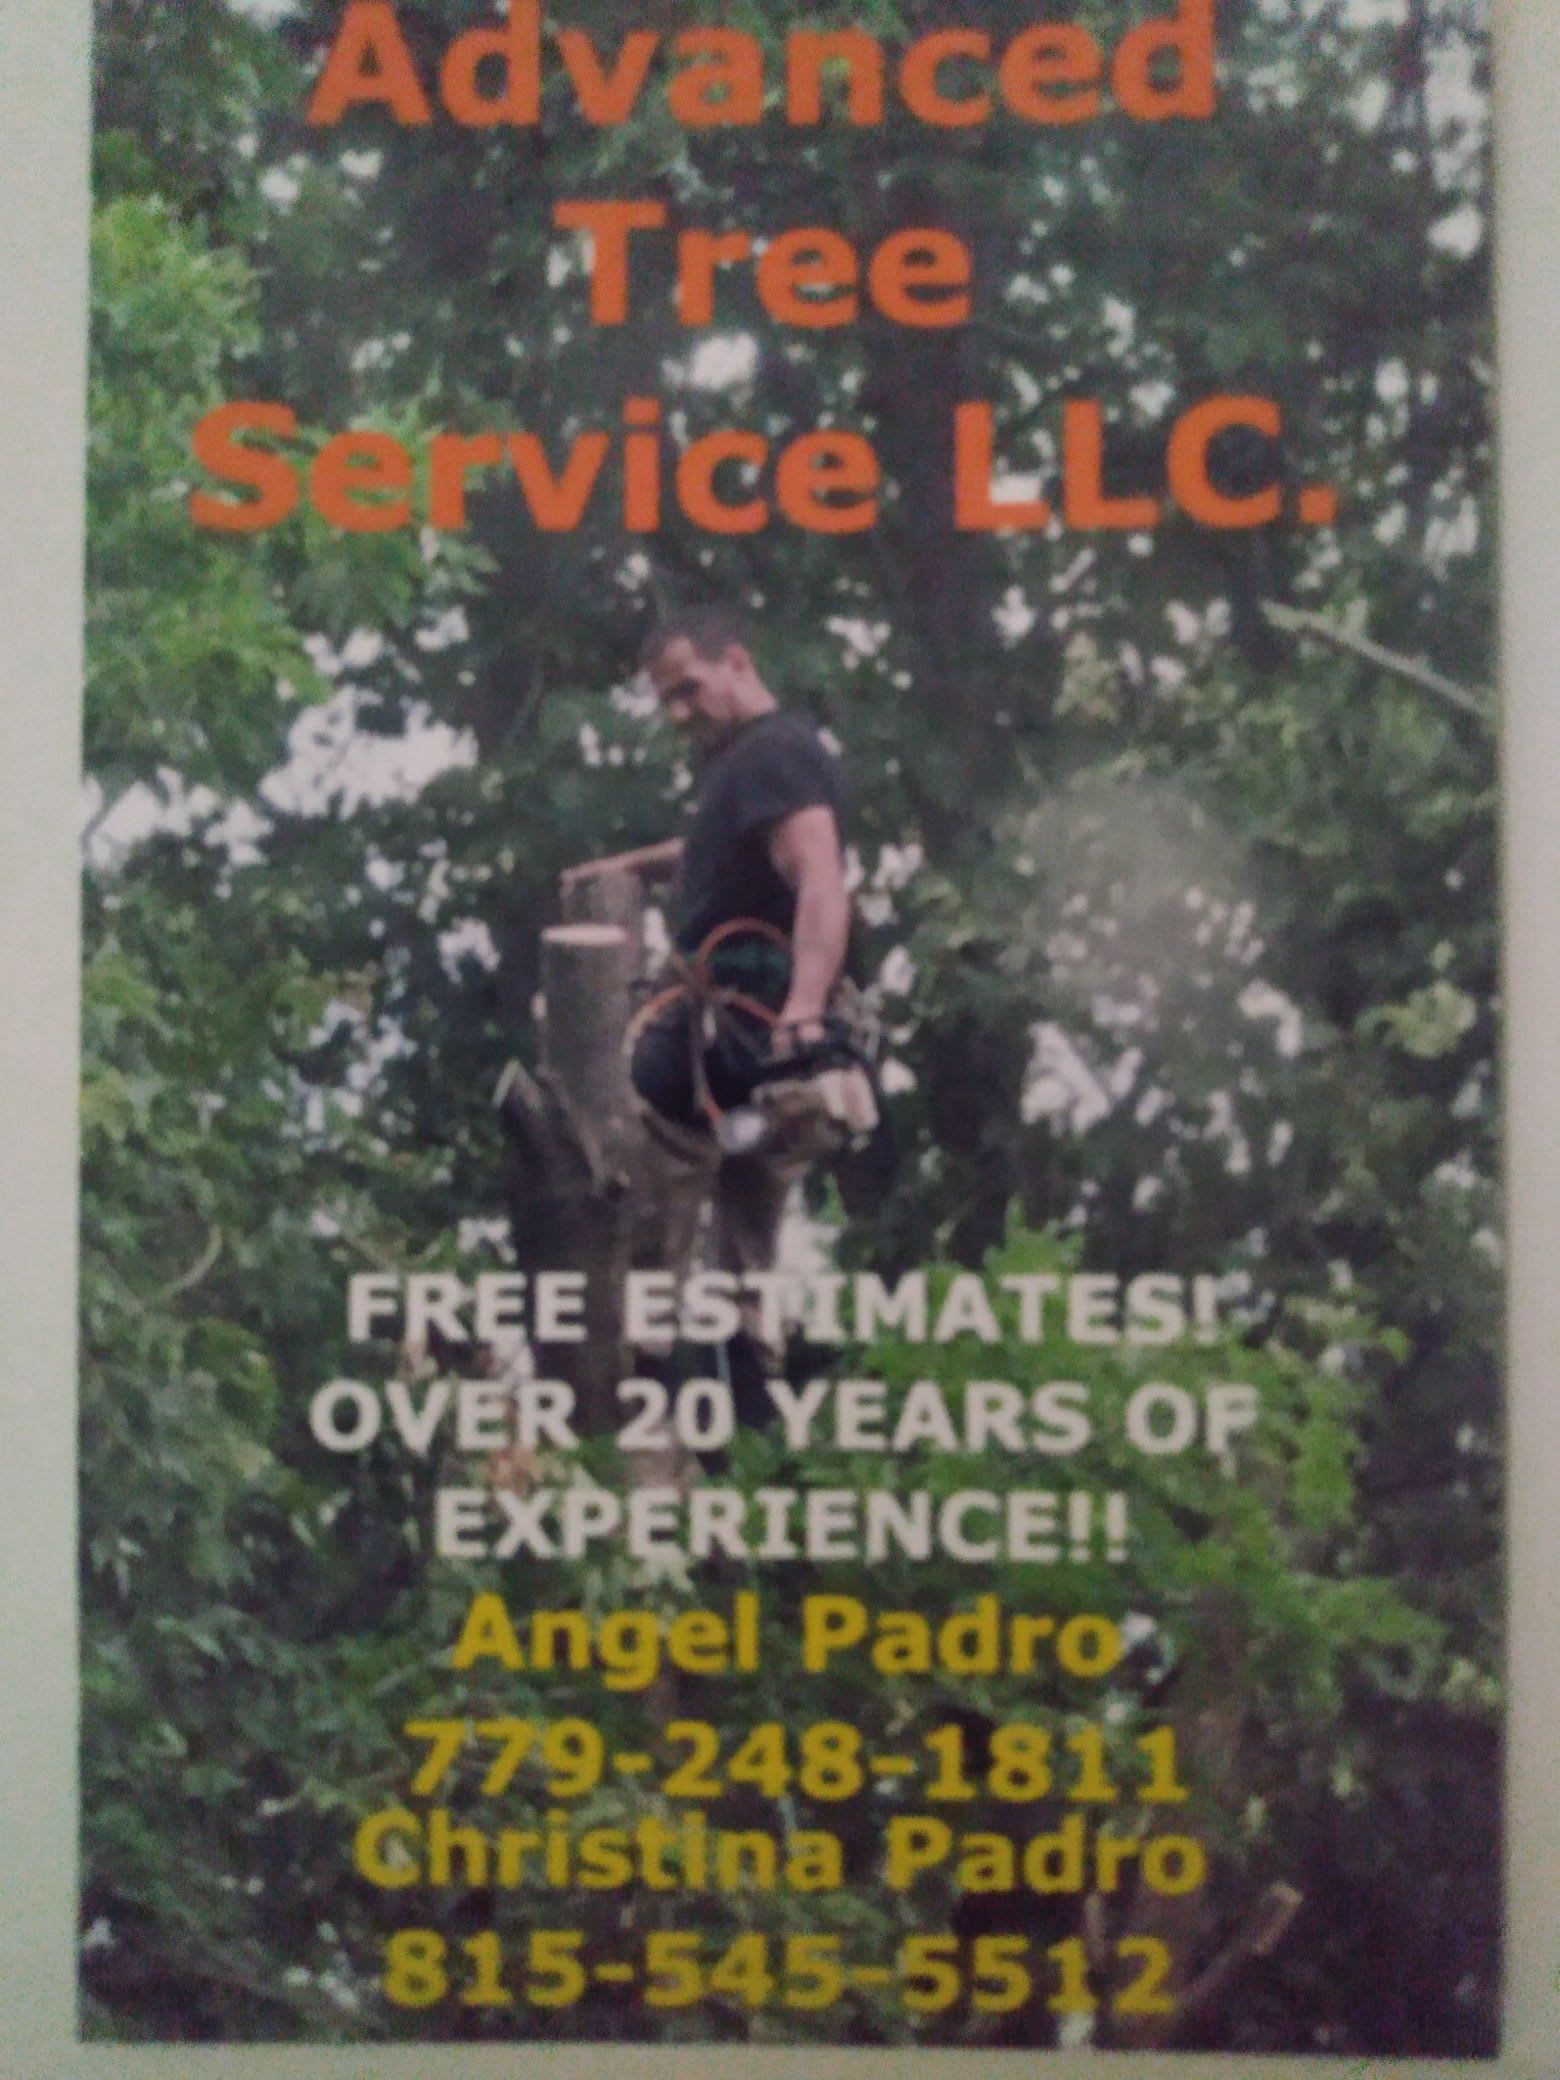 Advance Tree Service LLC